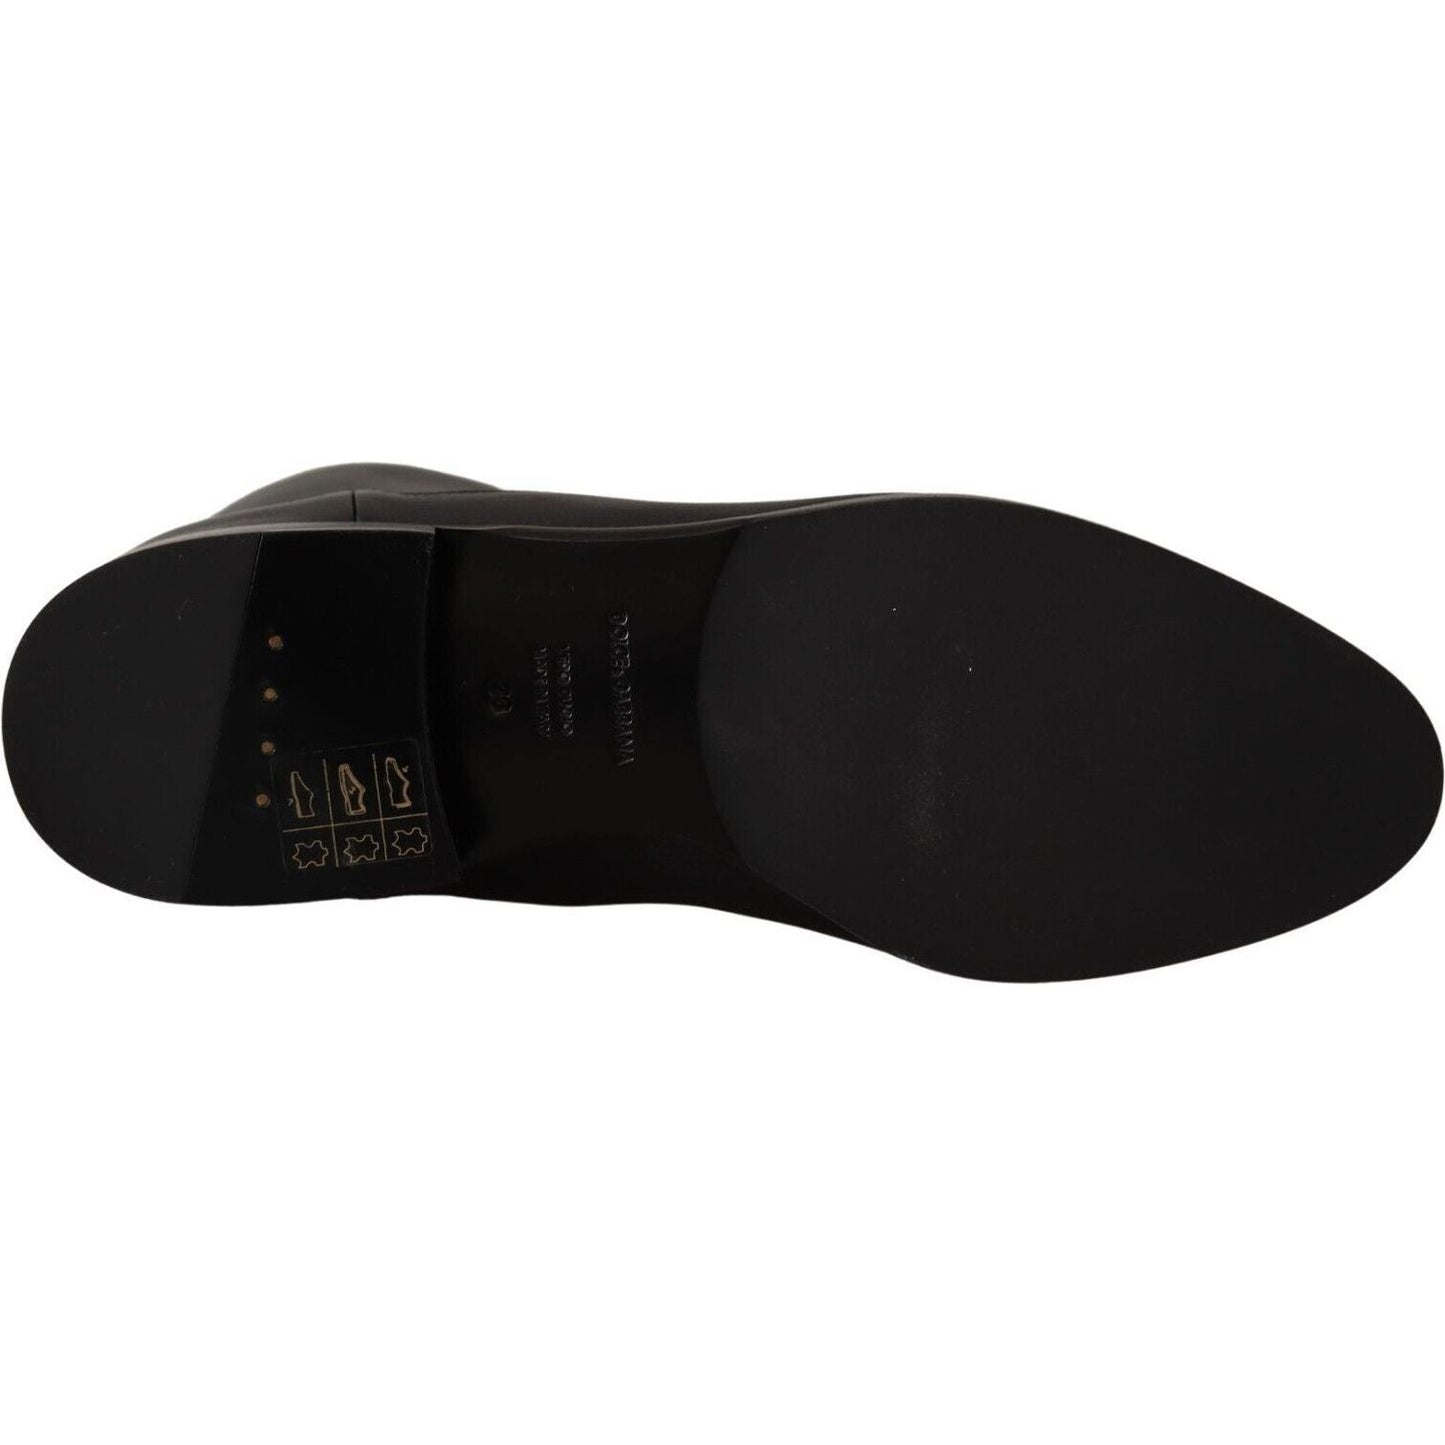 Dolce & Gabbana Elegant Leather Biker Boots black-leather-flats-logo-short-boots-shoes